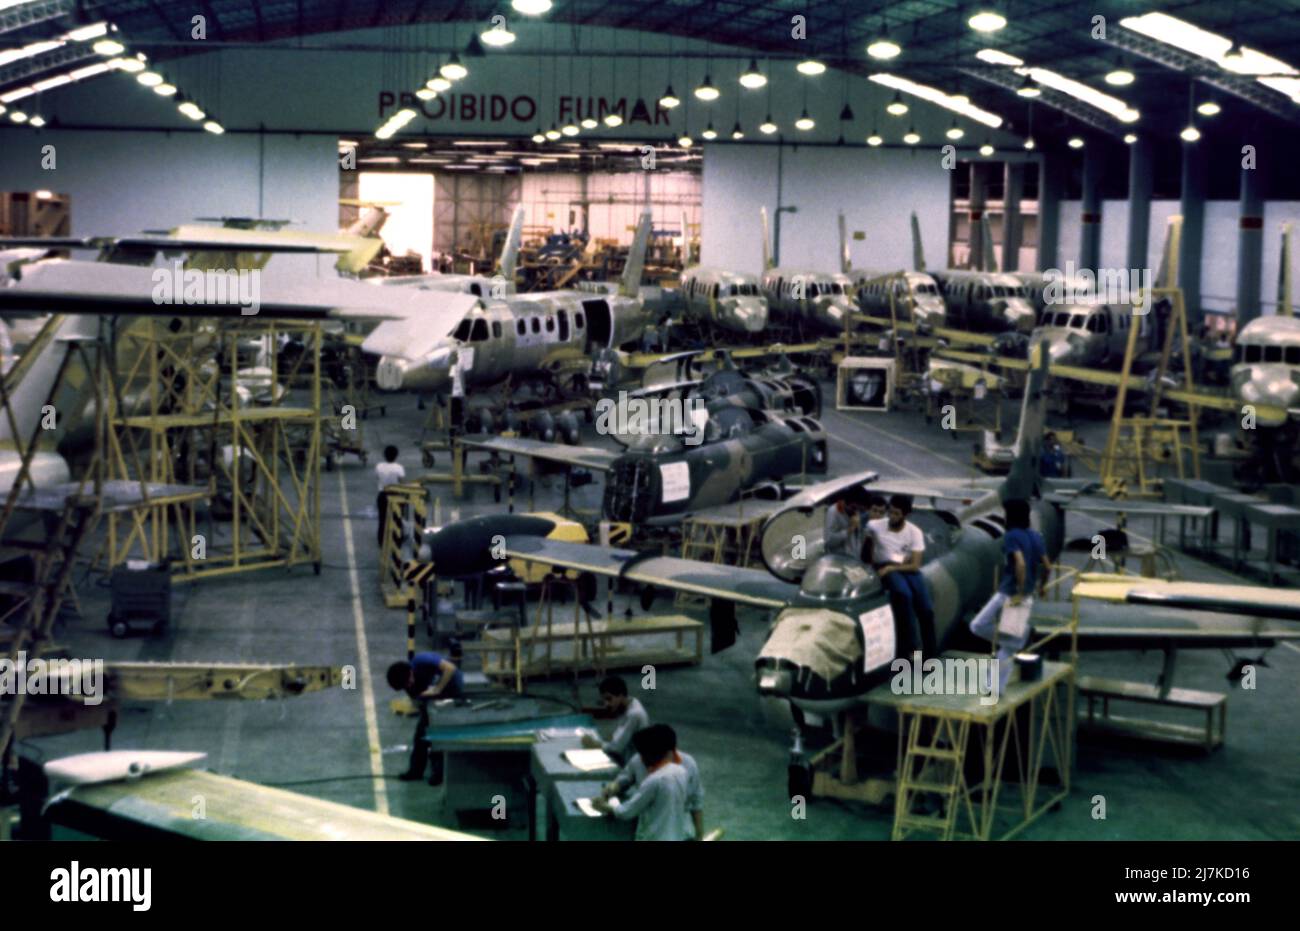 Brazil People Working in Aeroplane Factory Stock Photo